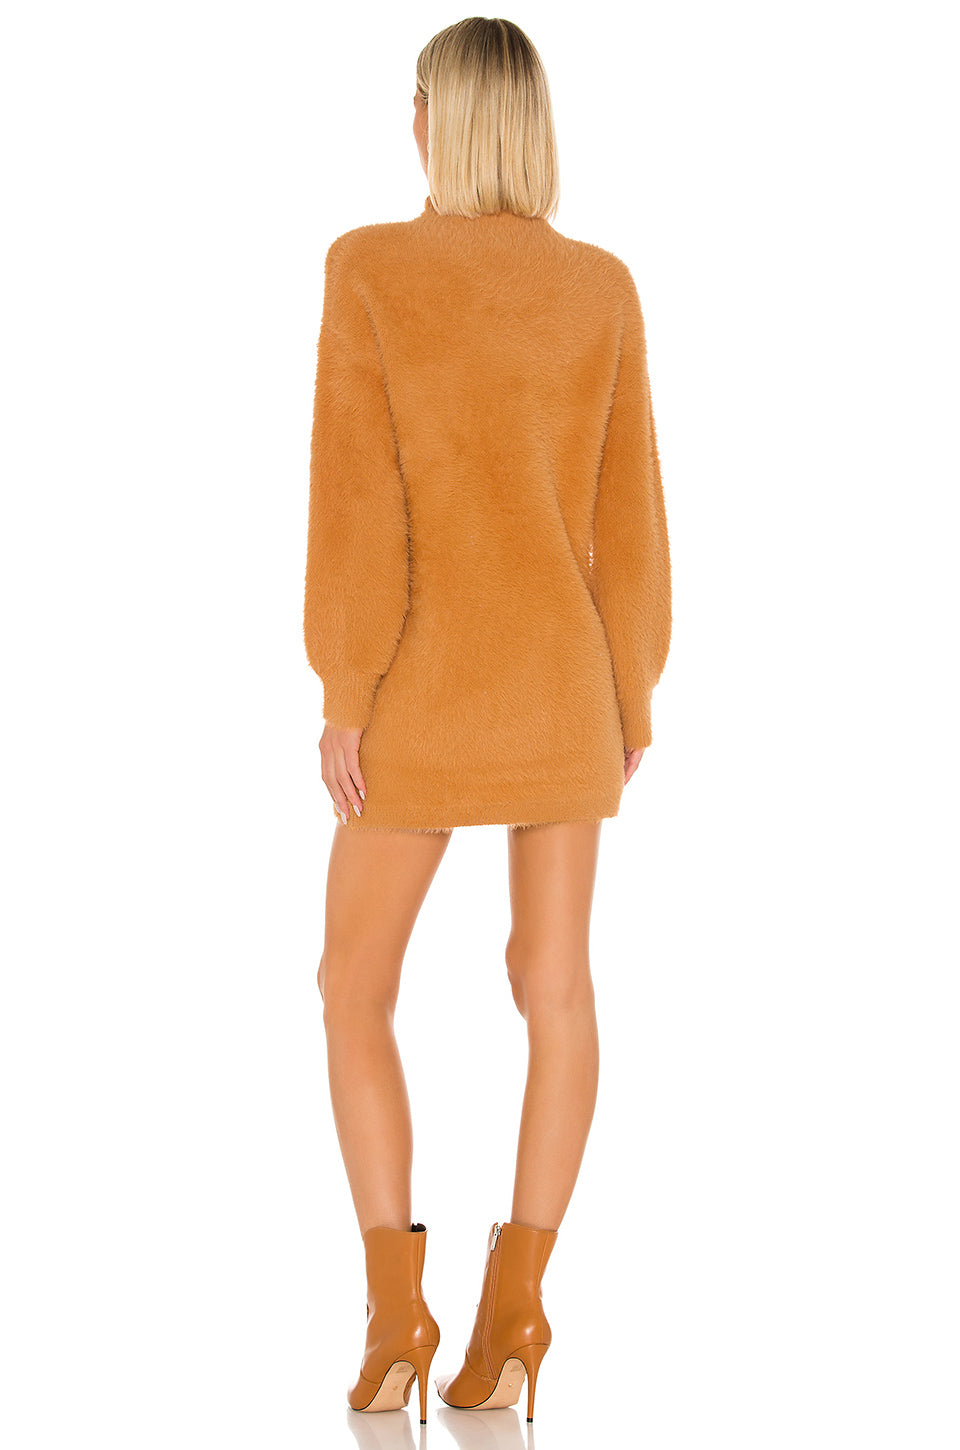 Honey Bear Sweater Dress in HONEY